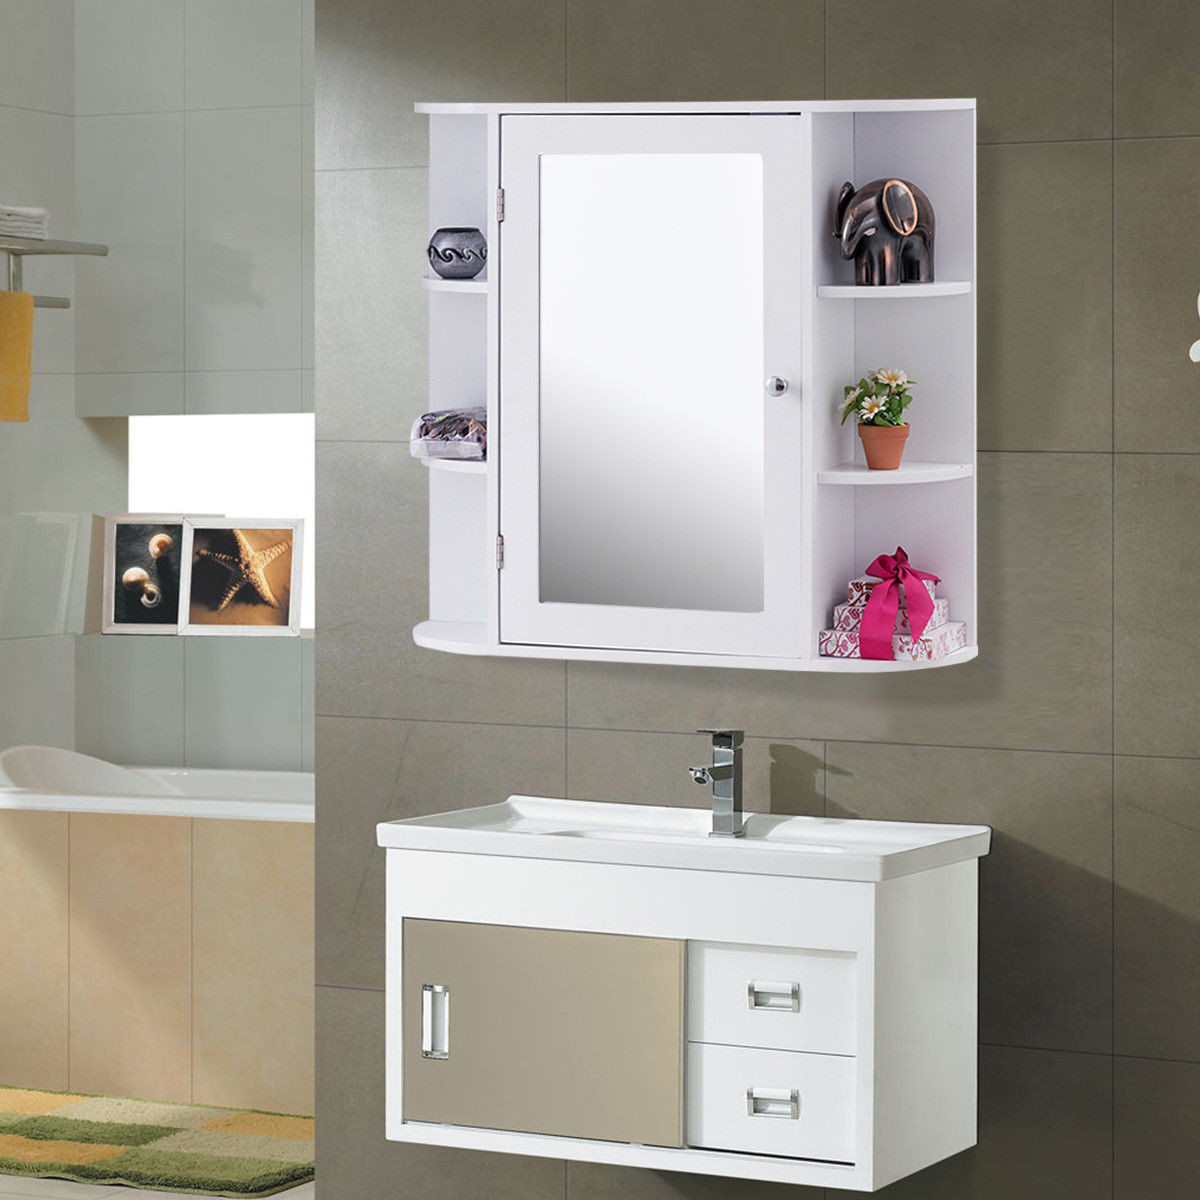 Bathroom Mirror Storage Cabinet
 Giantex Multipurpose Mount Wall Surface Bathroom Storage